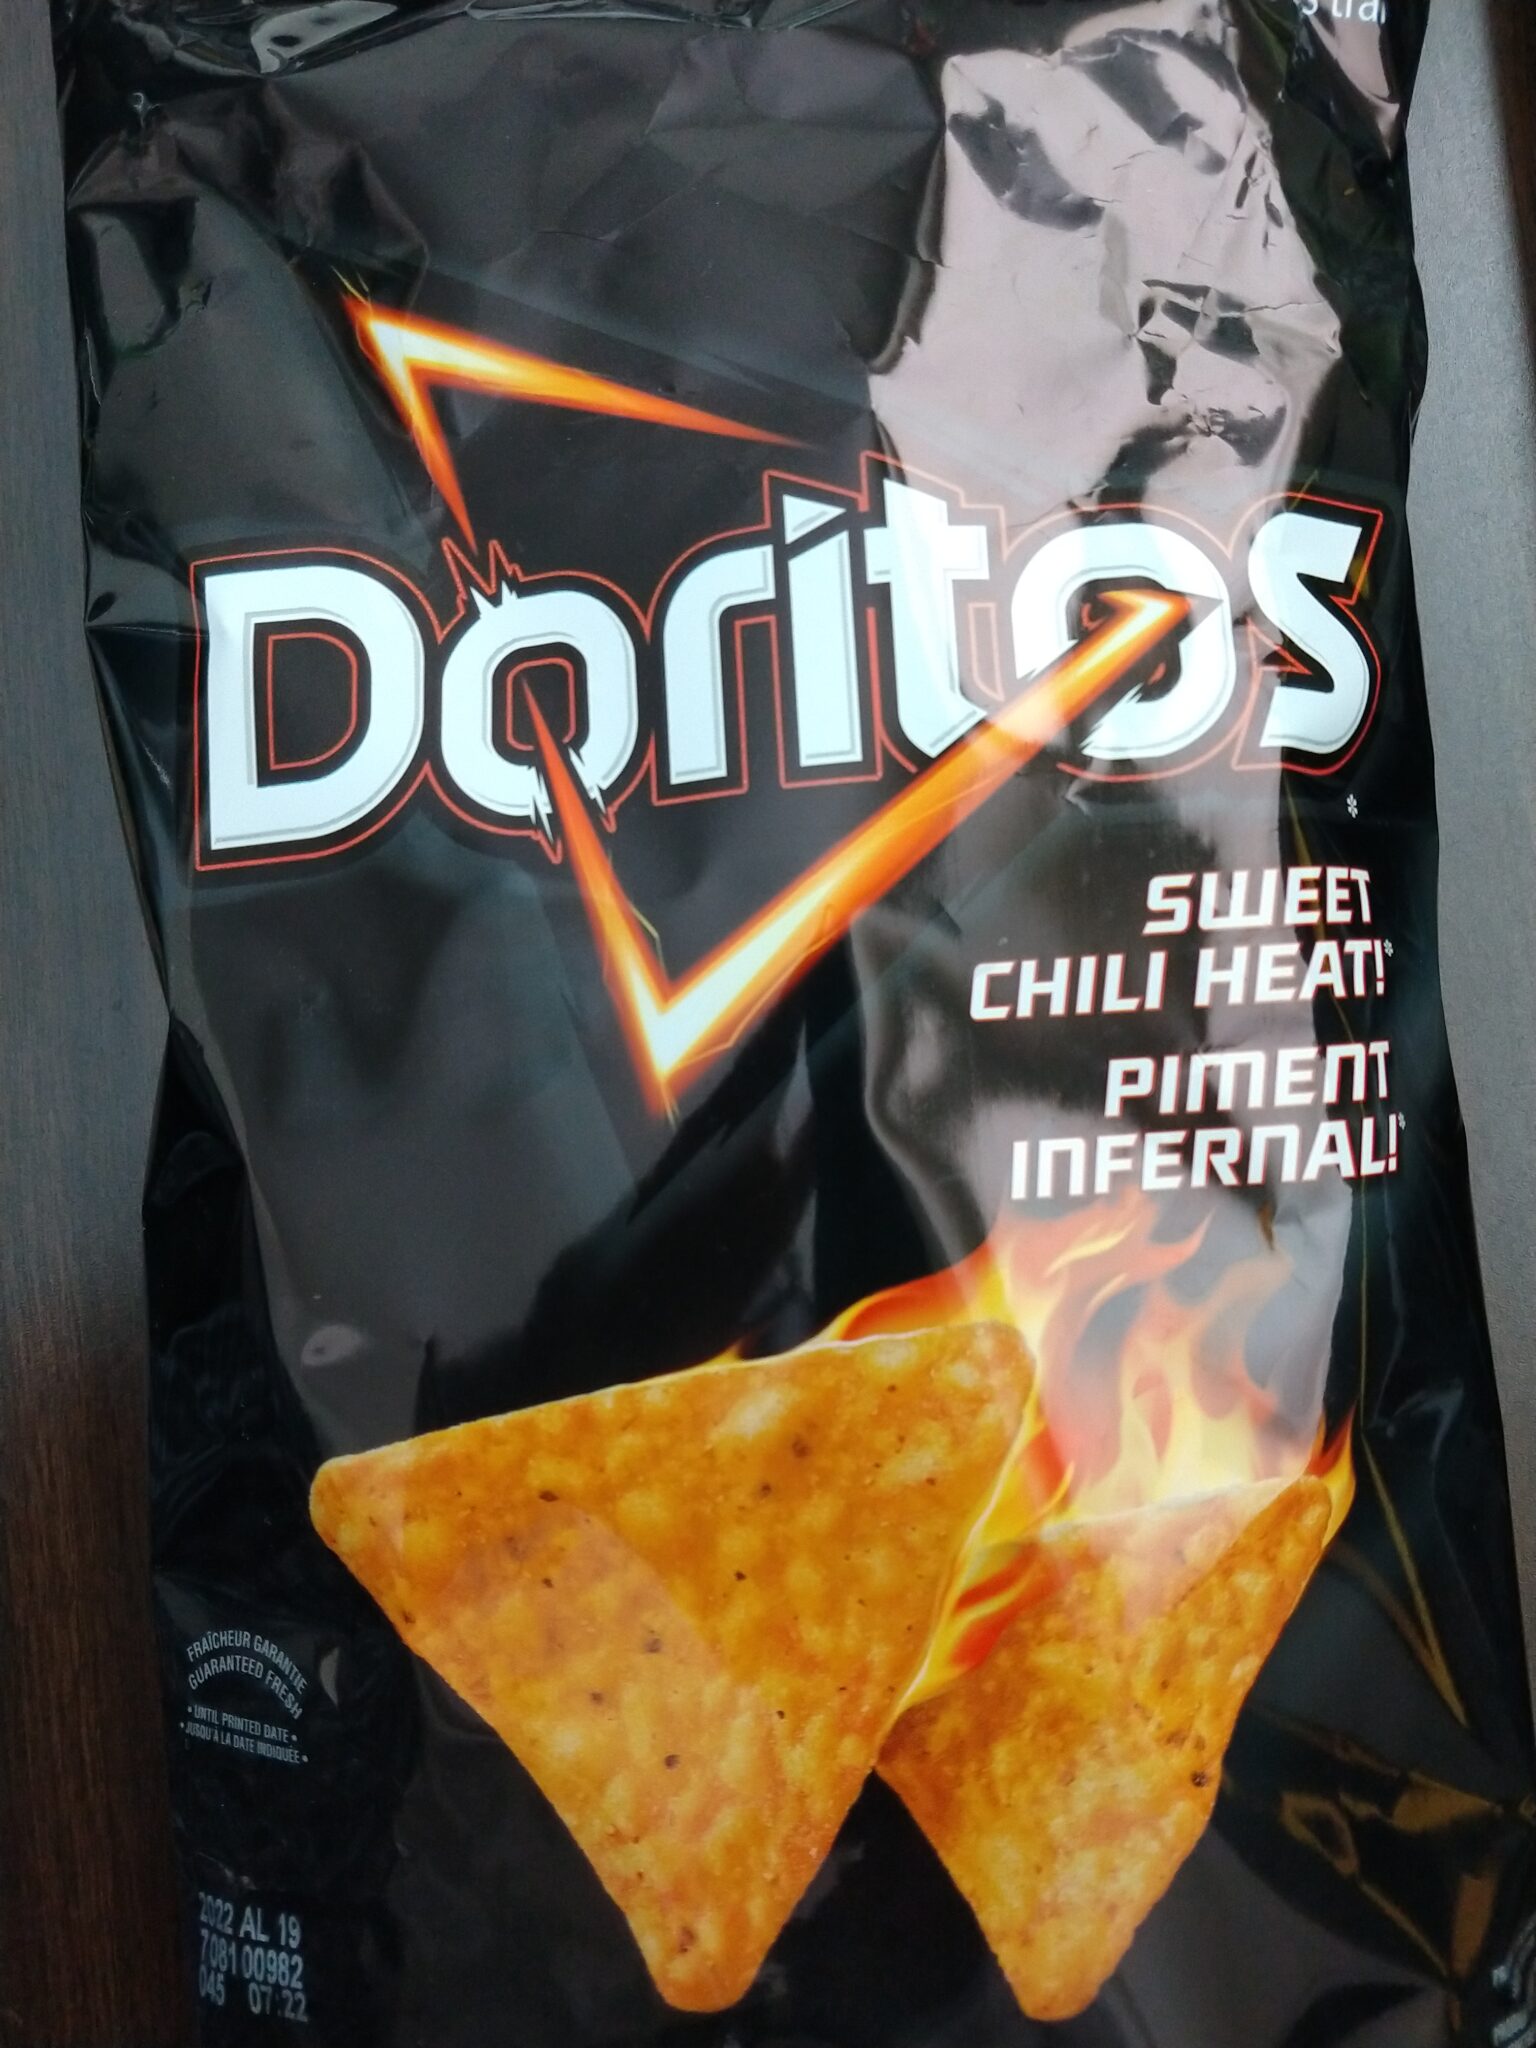 Doritos – Sweet Chili Heat